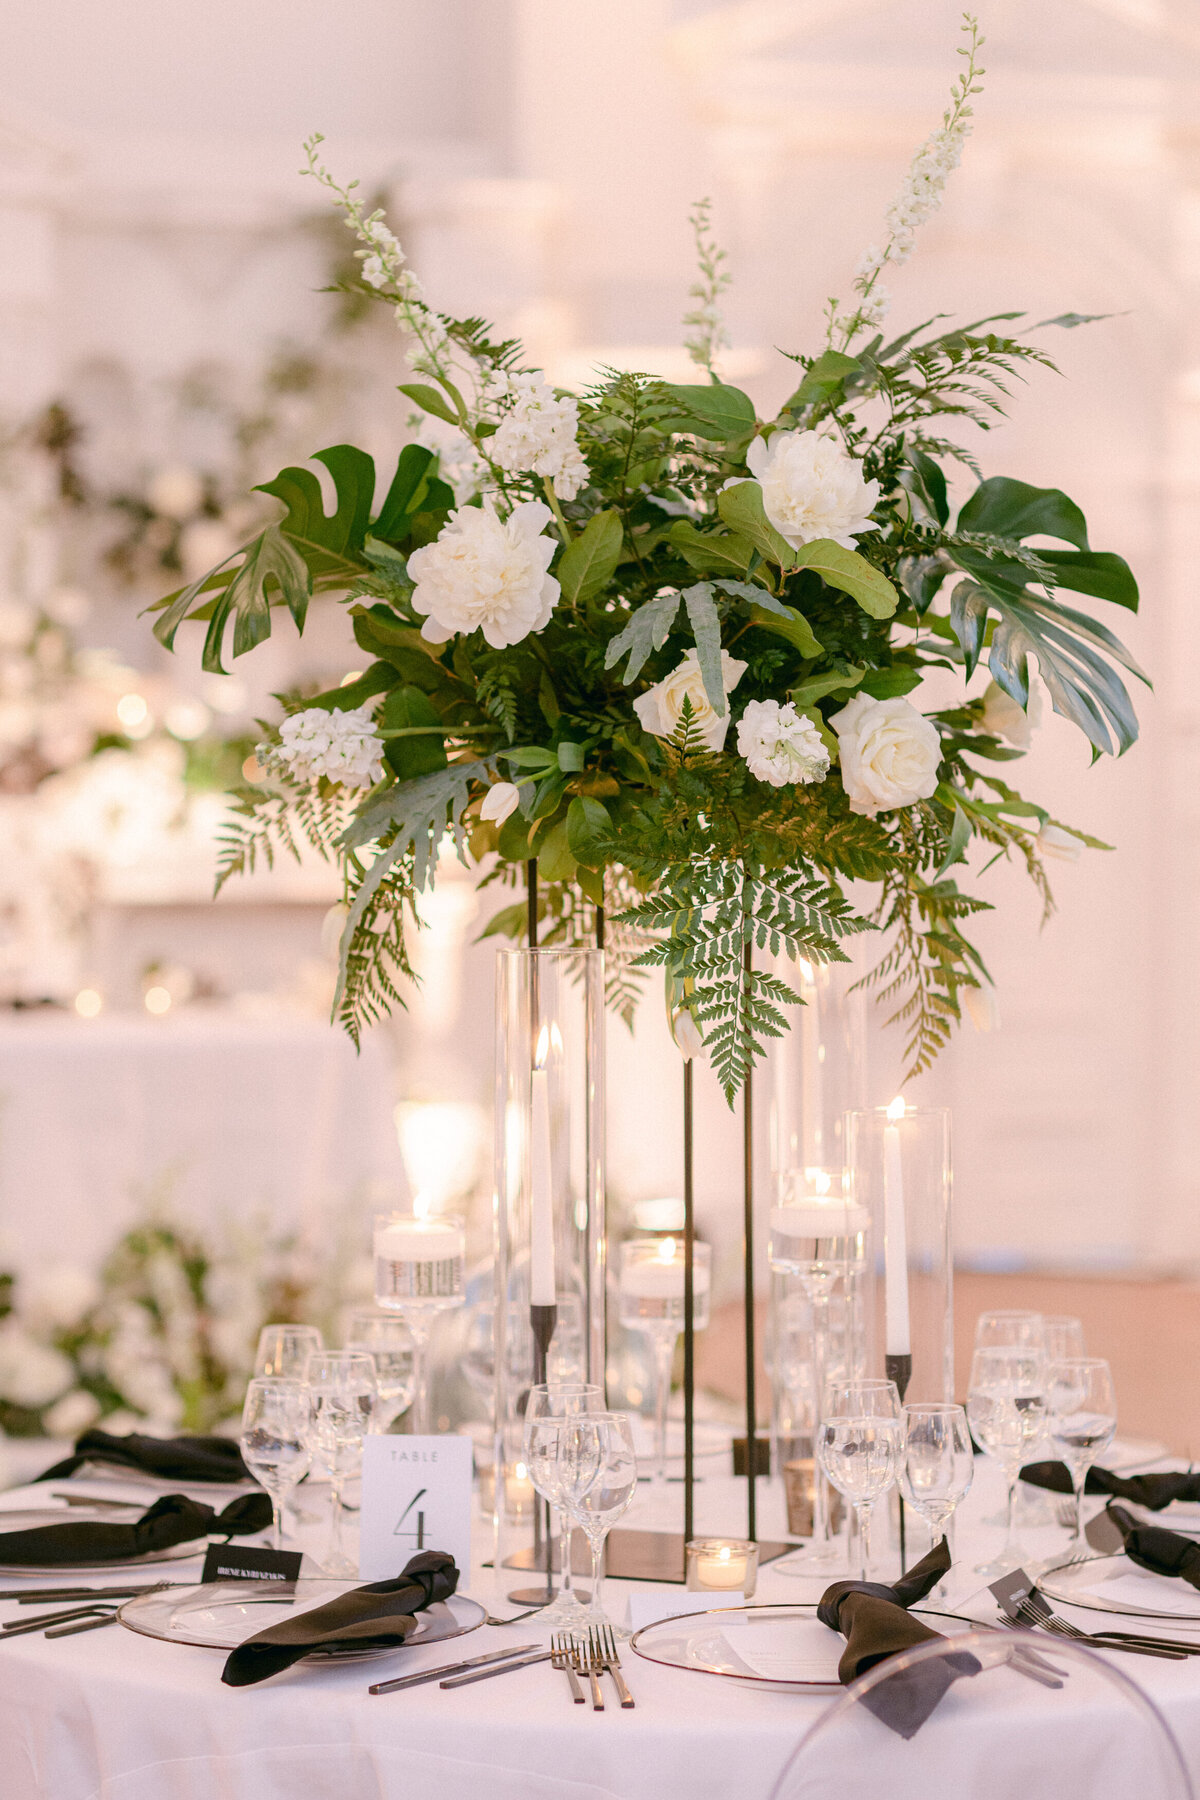 Atelier-Carmel-Wedding-Florist-GALLERY-Centerpieces-60